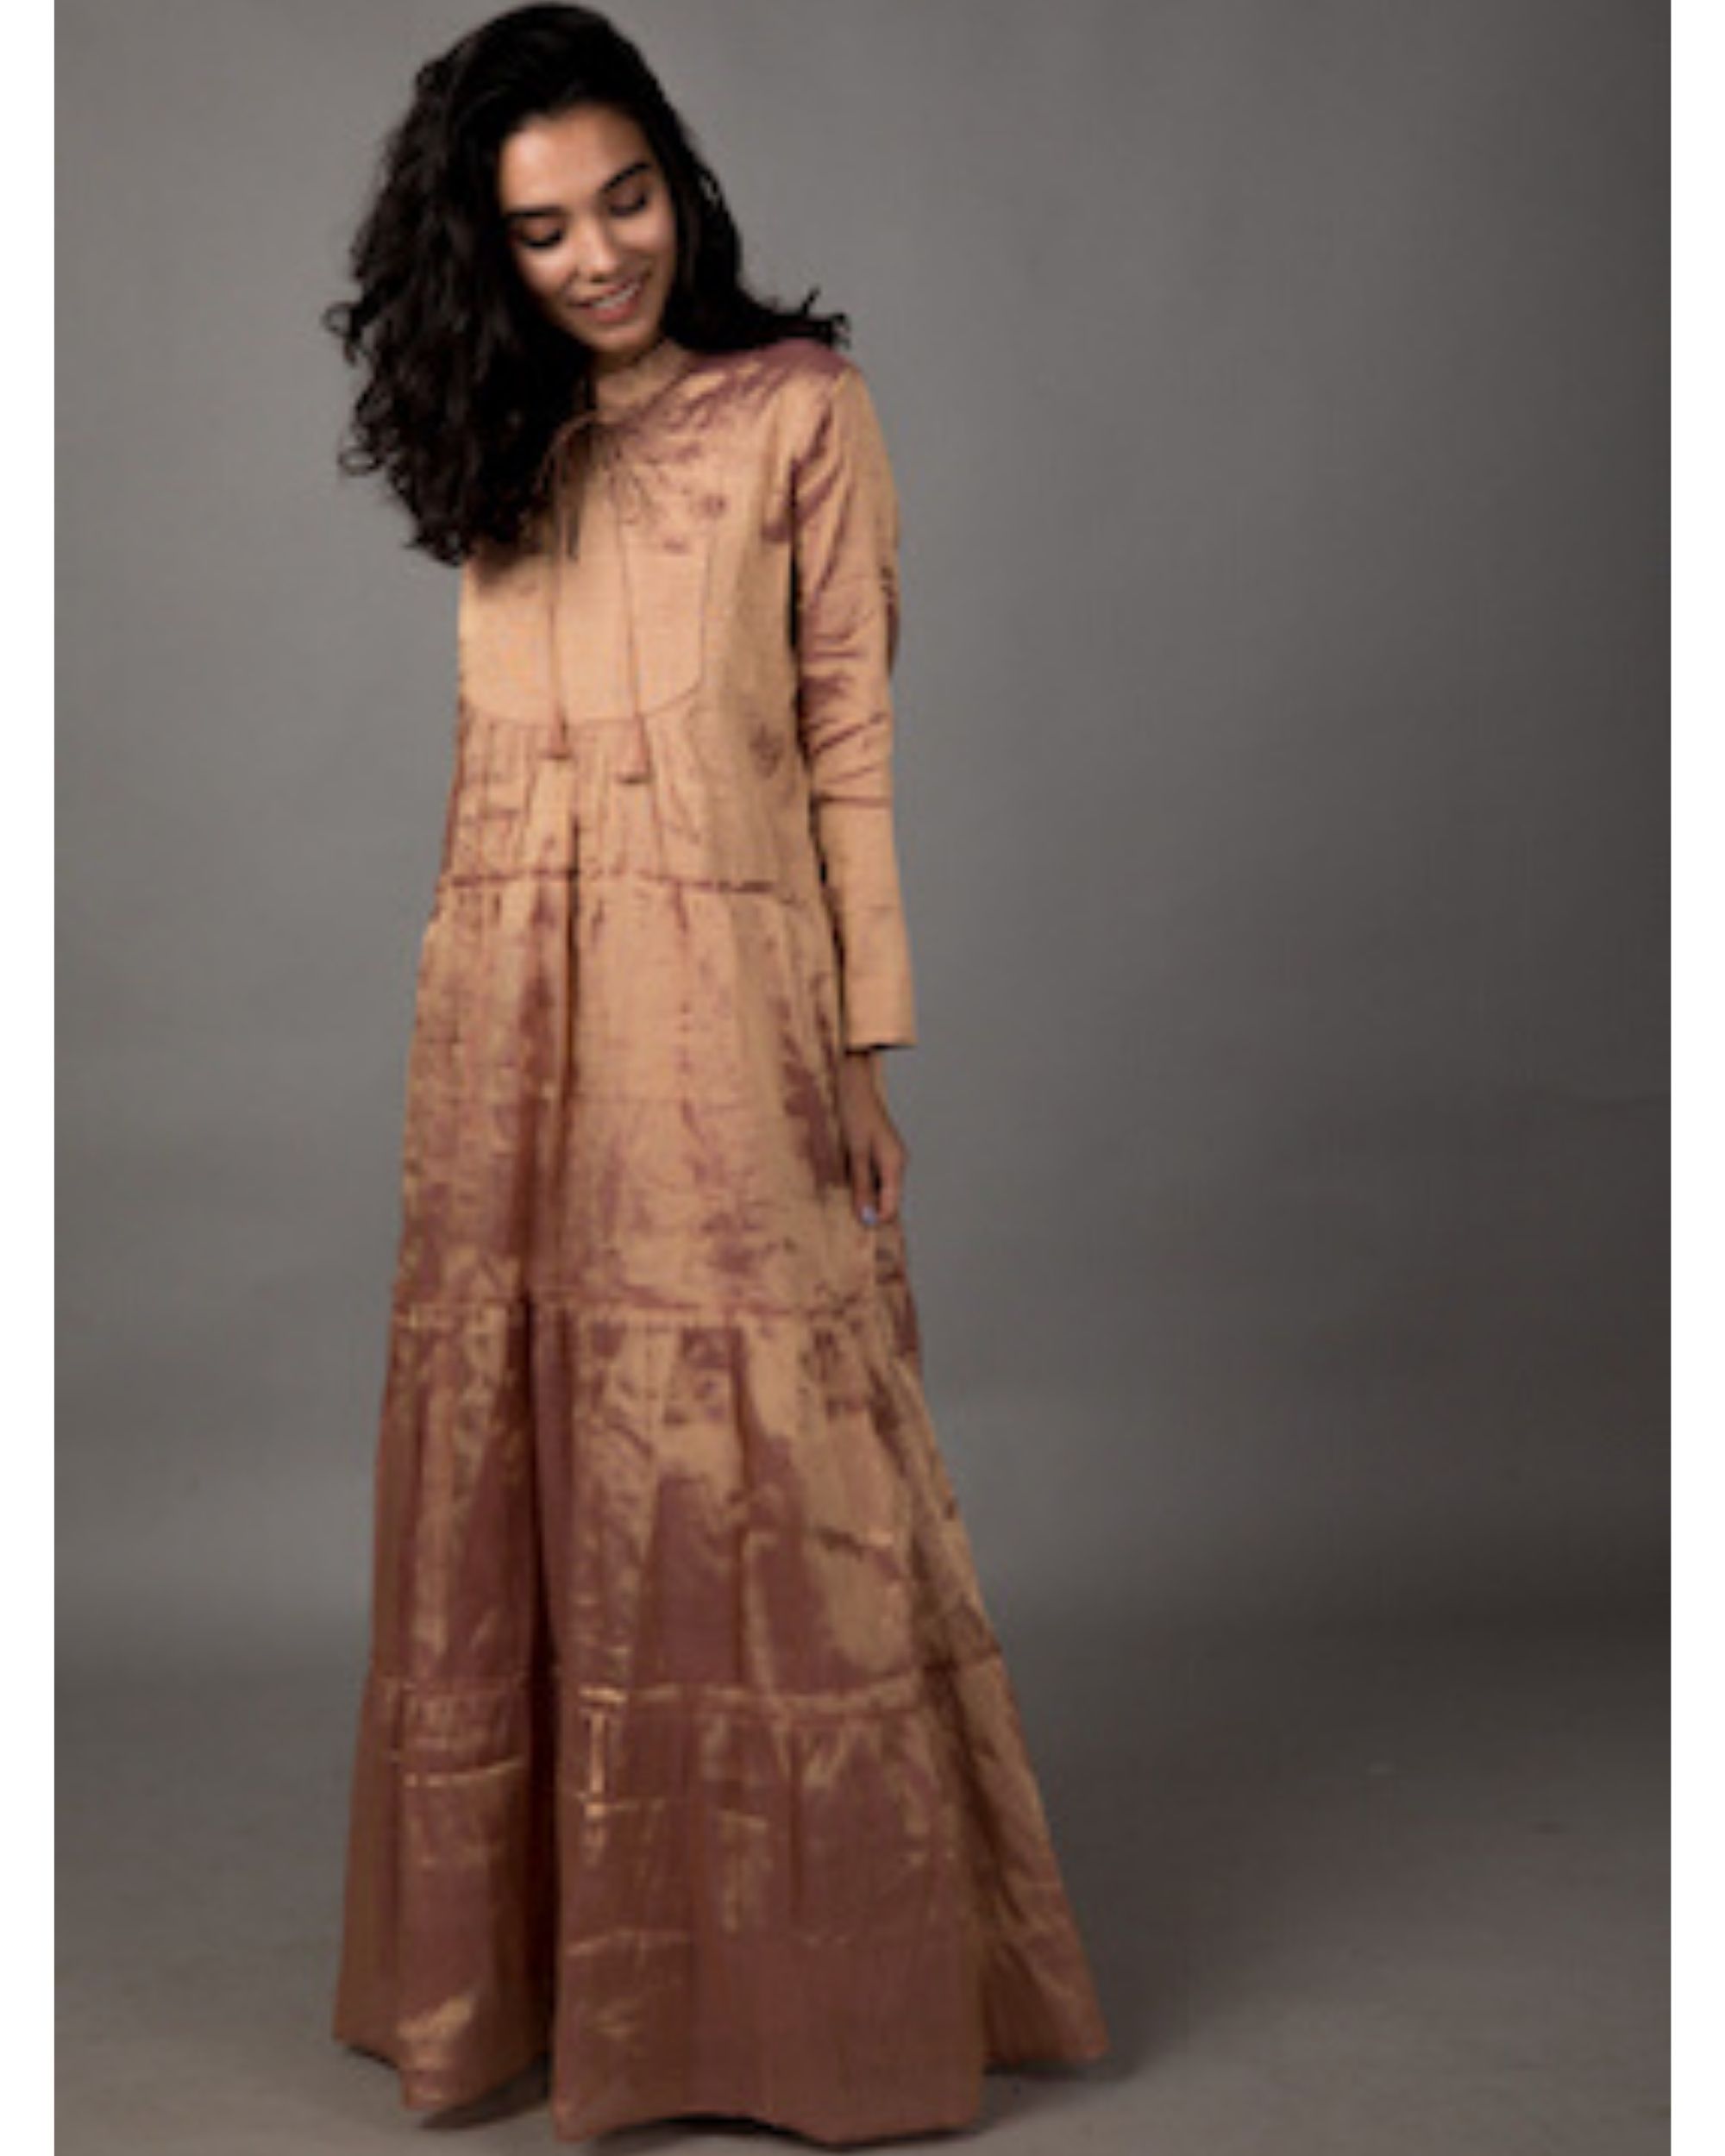 Rose gold tiered dress by Kokum | The Secret Label